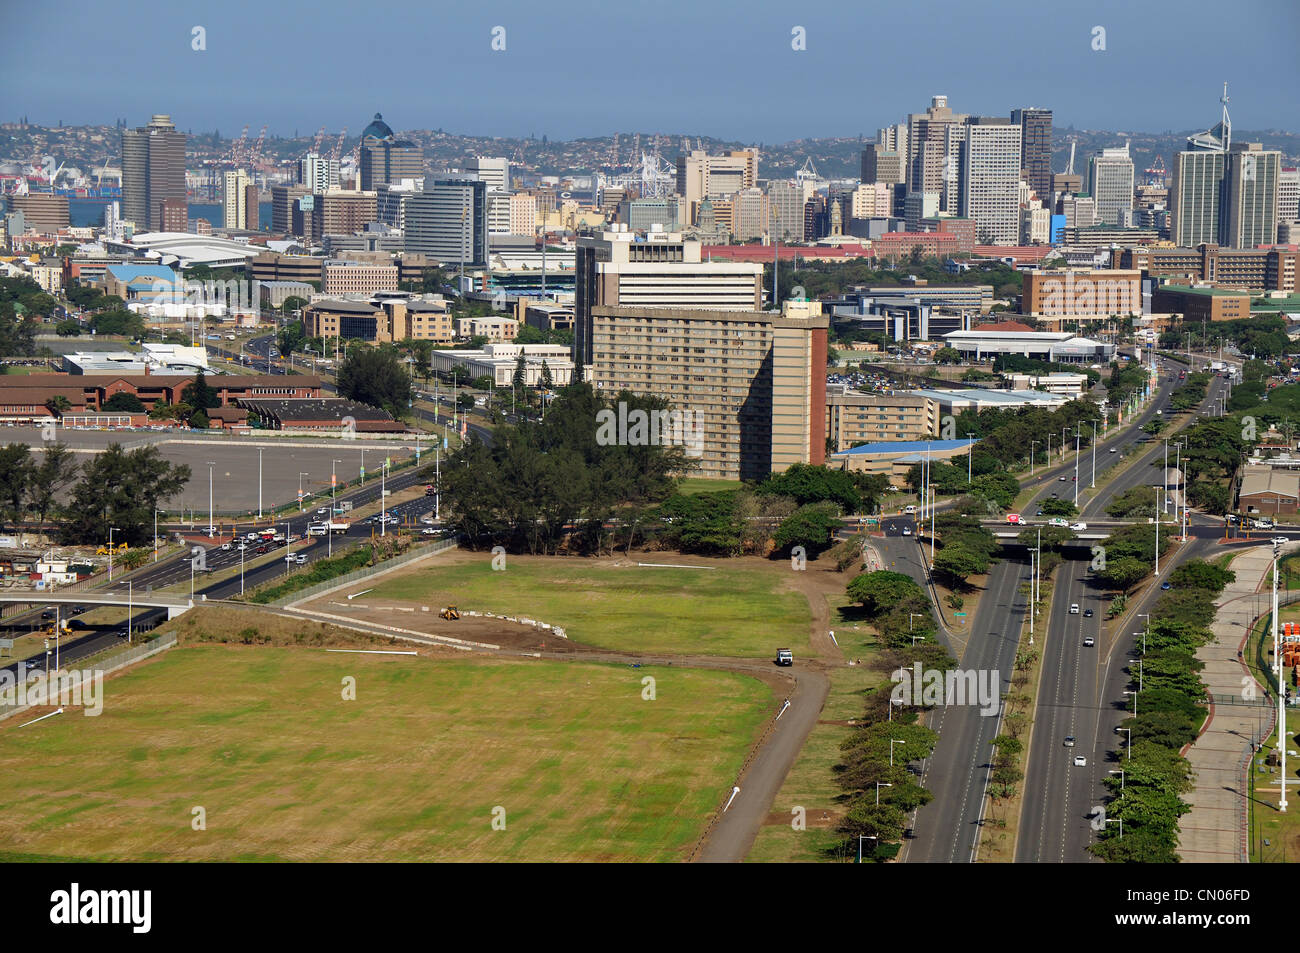 View of the Durban CBD from the Moses Mabhida Stadium viewing platform Stock Photo